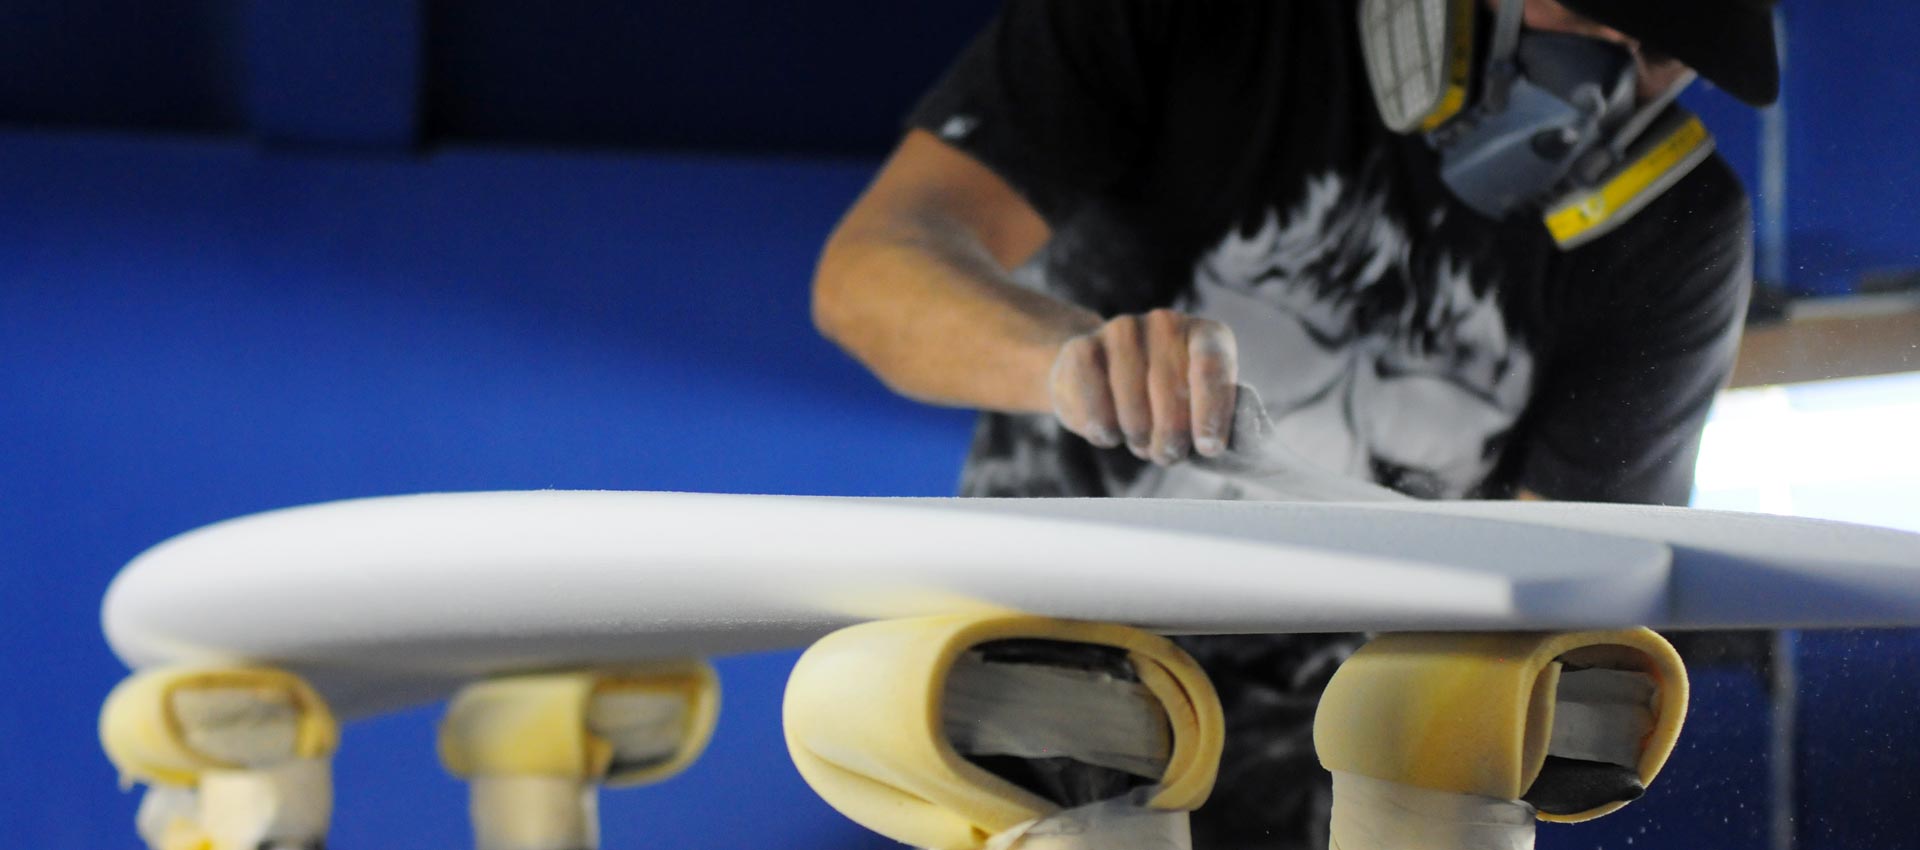 Silver Surf Surfboards - Shaper- Fabrica de Pranchas de Surf no Brasil